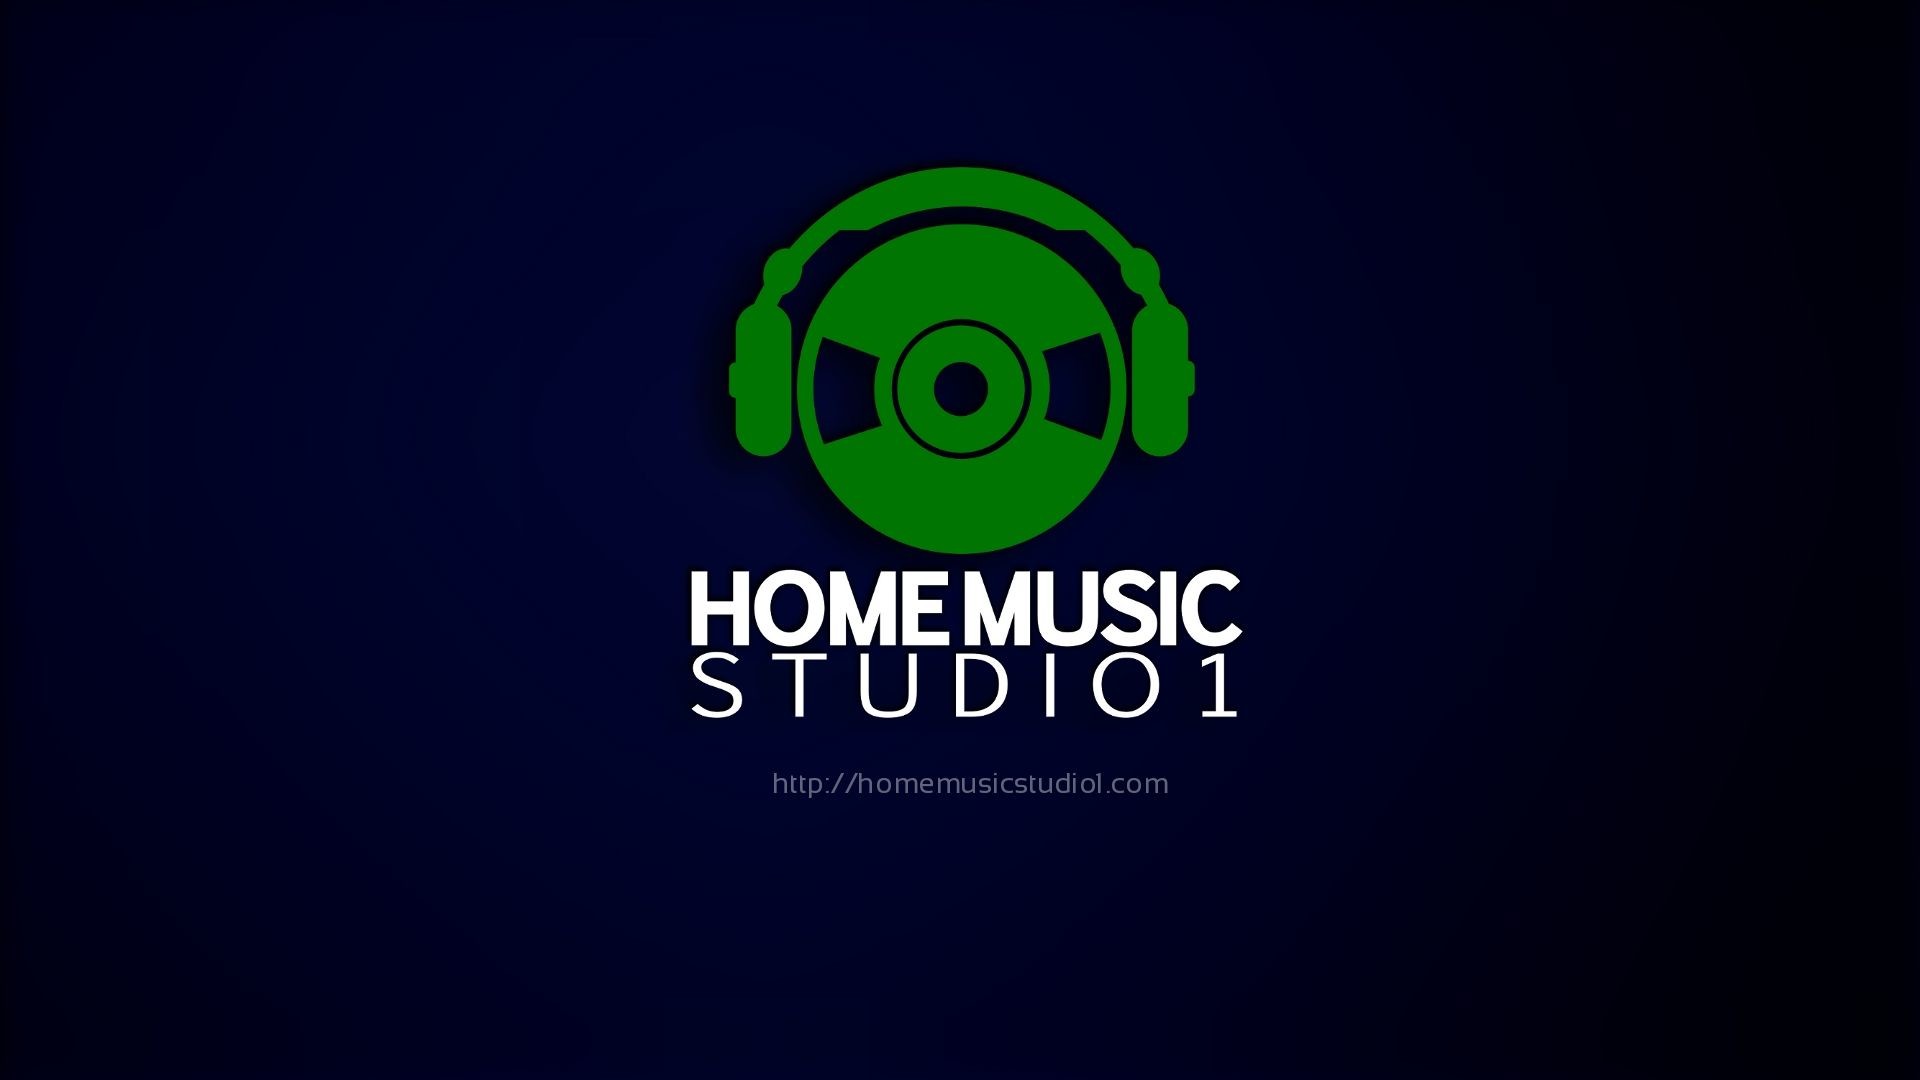 1920x1080 Free Home Music Studio 1 Wallpapers - Home Music Studio 1